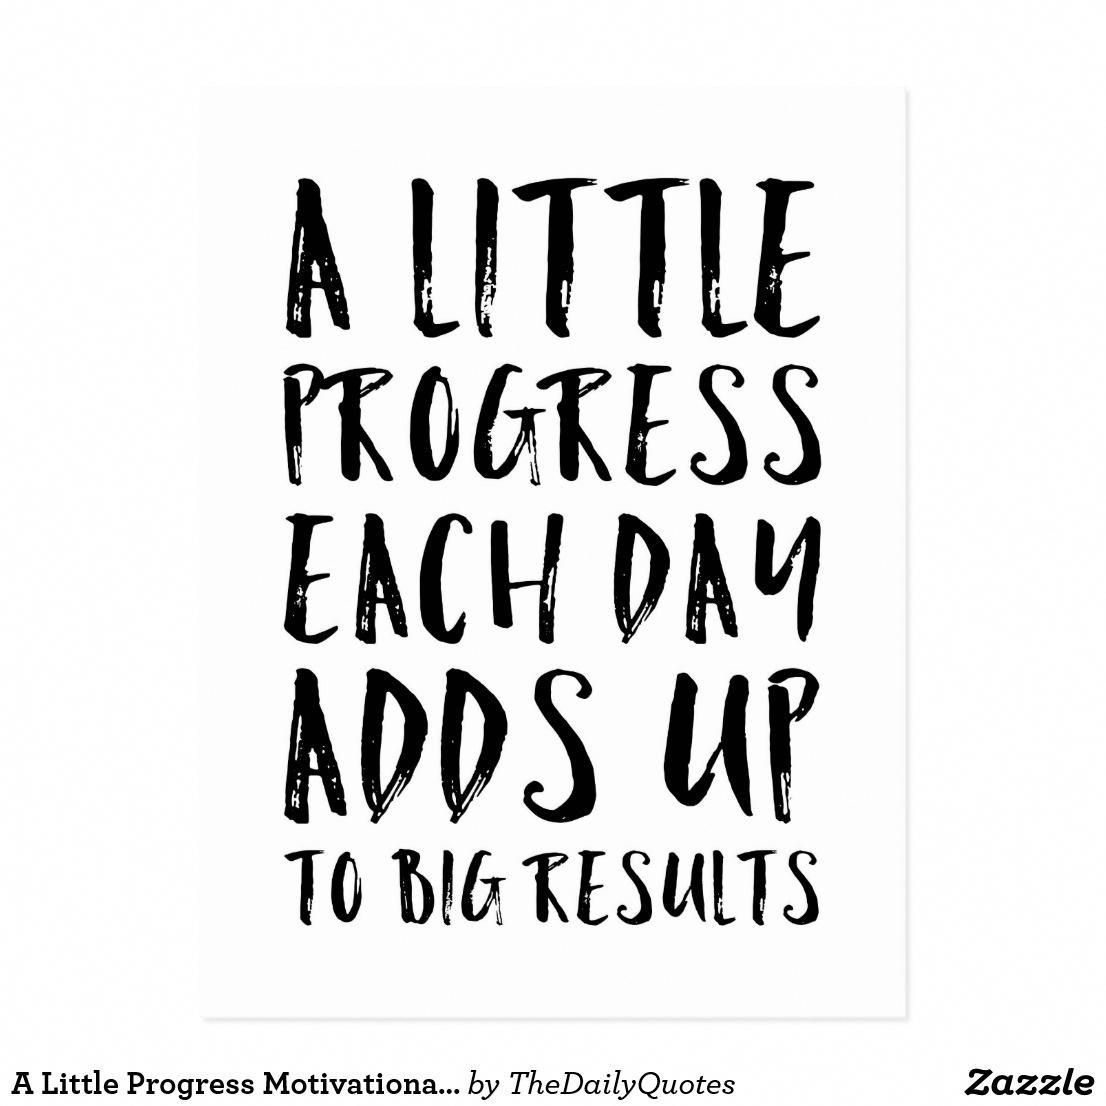 A Little Progress Motivational Quote Postcard | Zazzle.com - A Little Progress Motivational Quote Postcard | Zazzle.com -   16 fitness Quotes for kids ideas